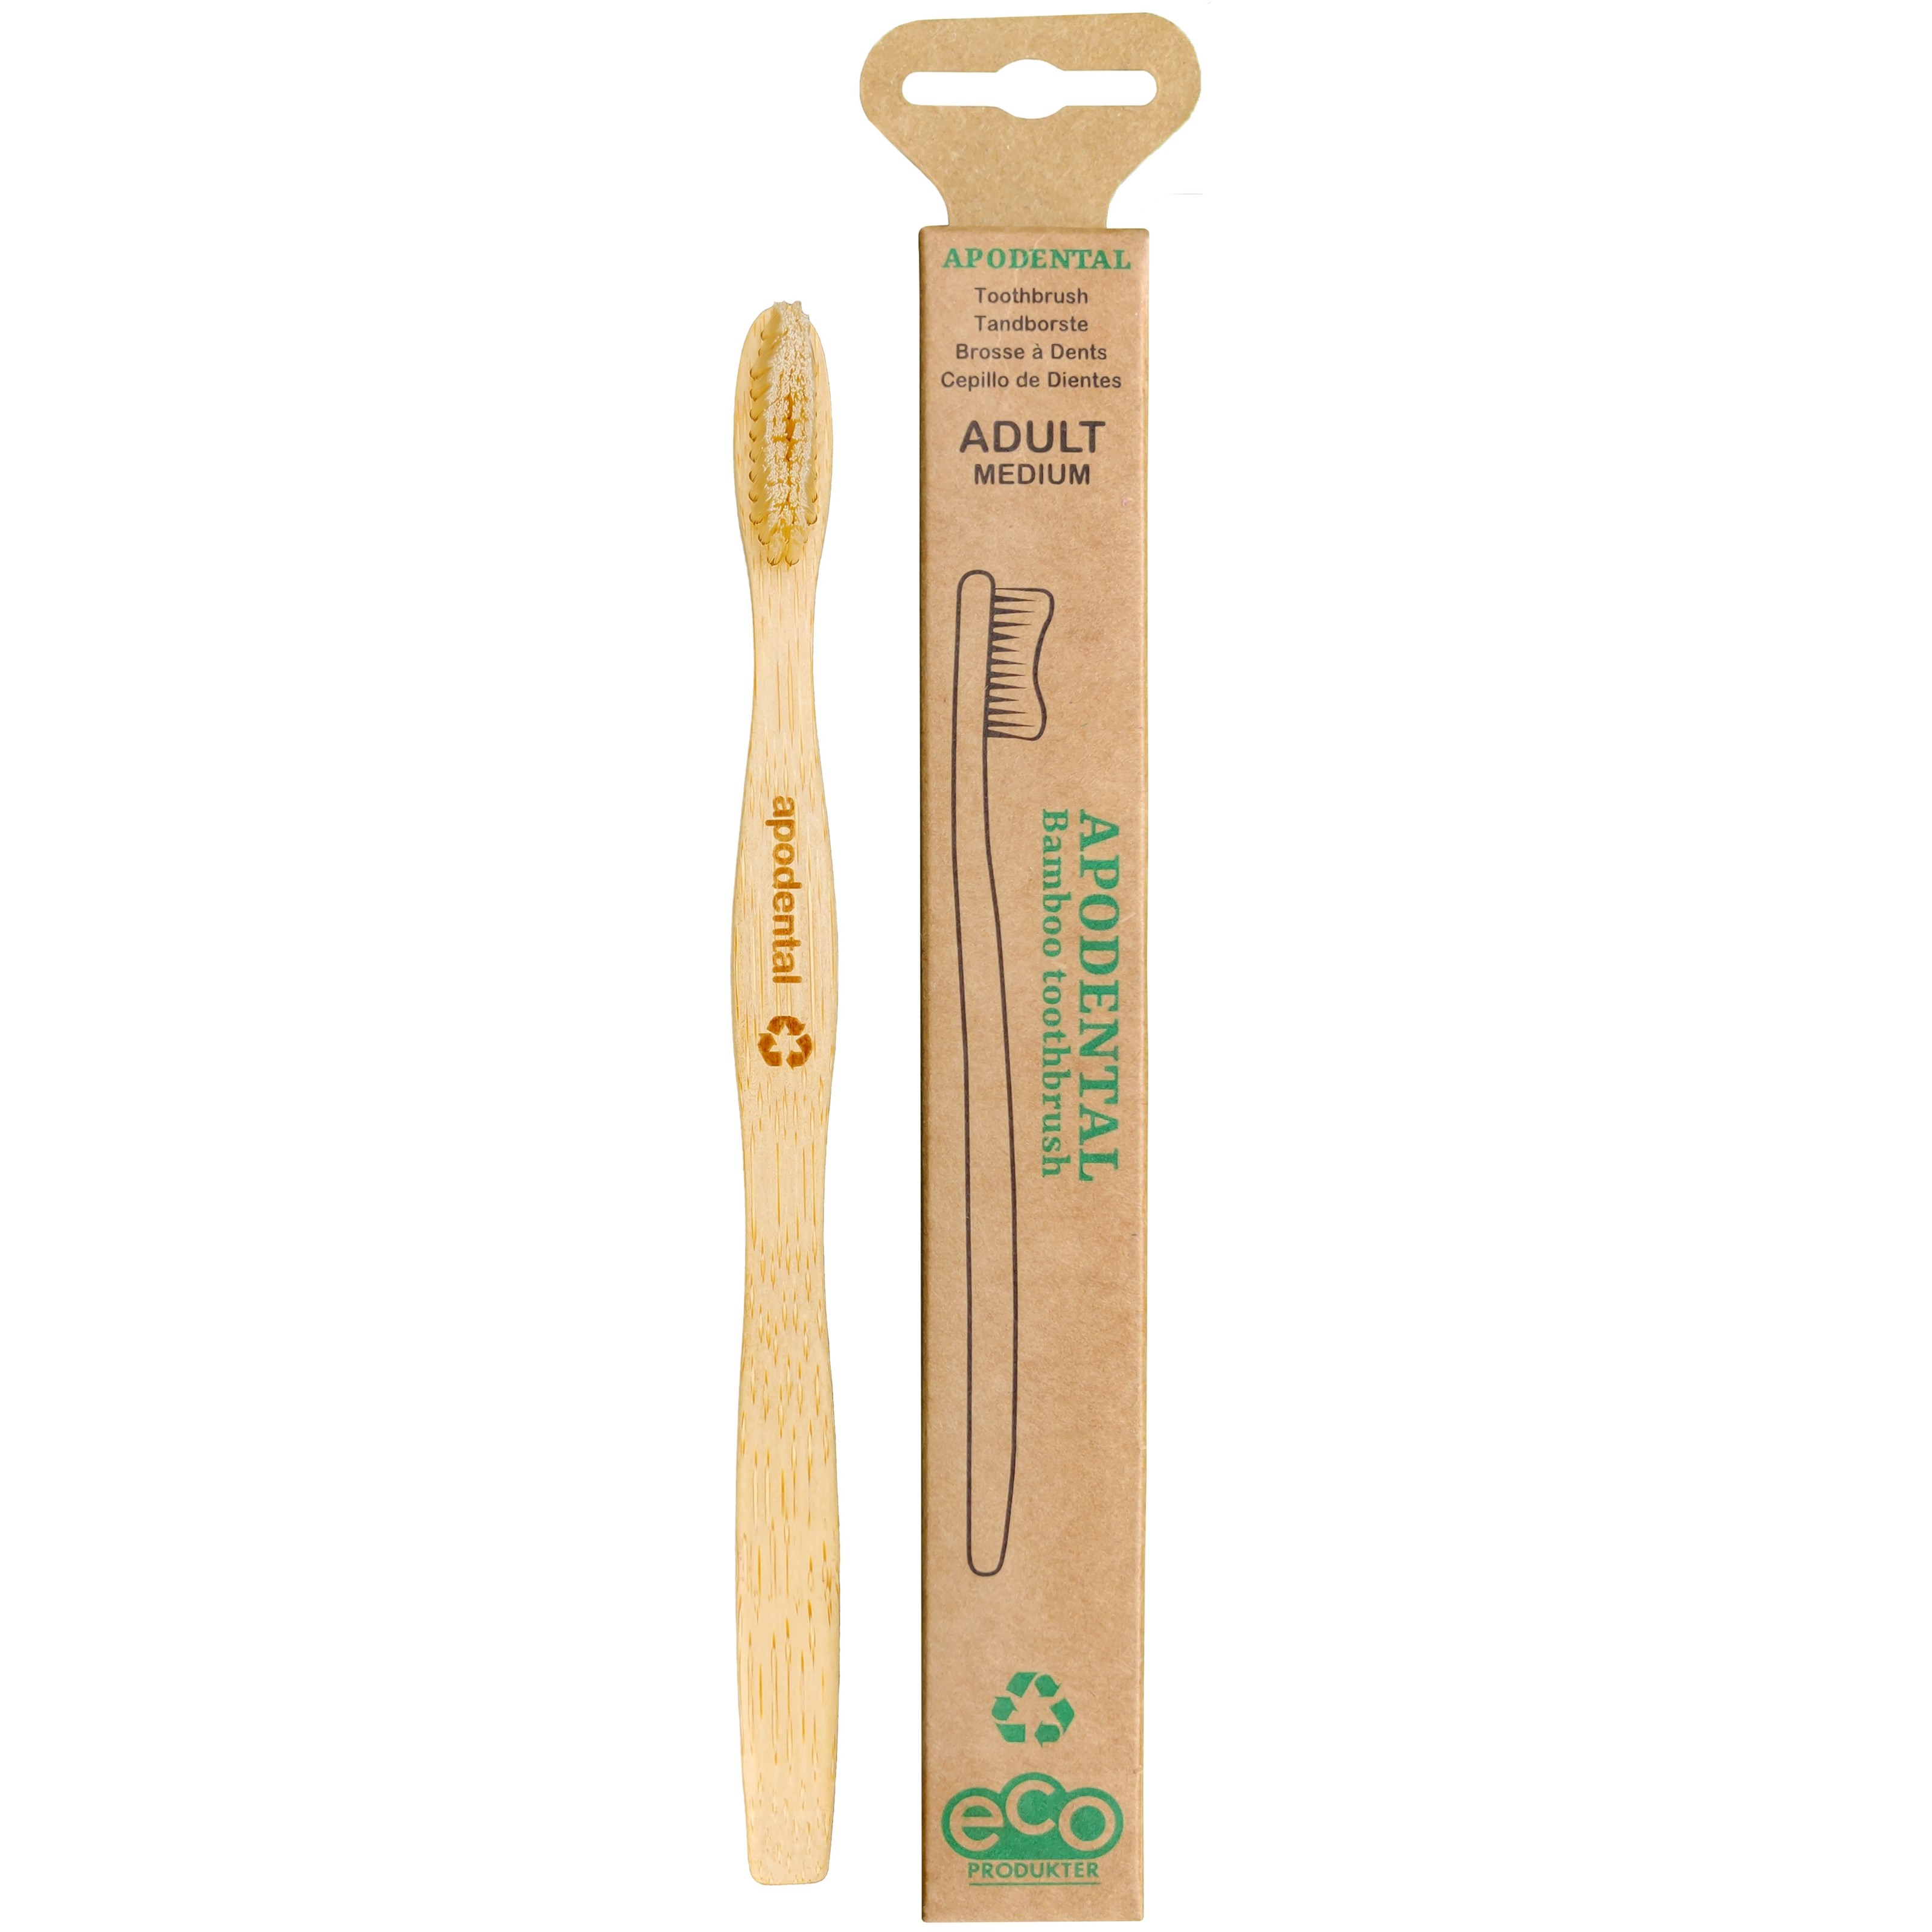 Apodental Bamboo Toothbrush Adult Medium